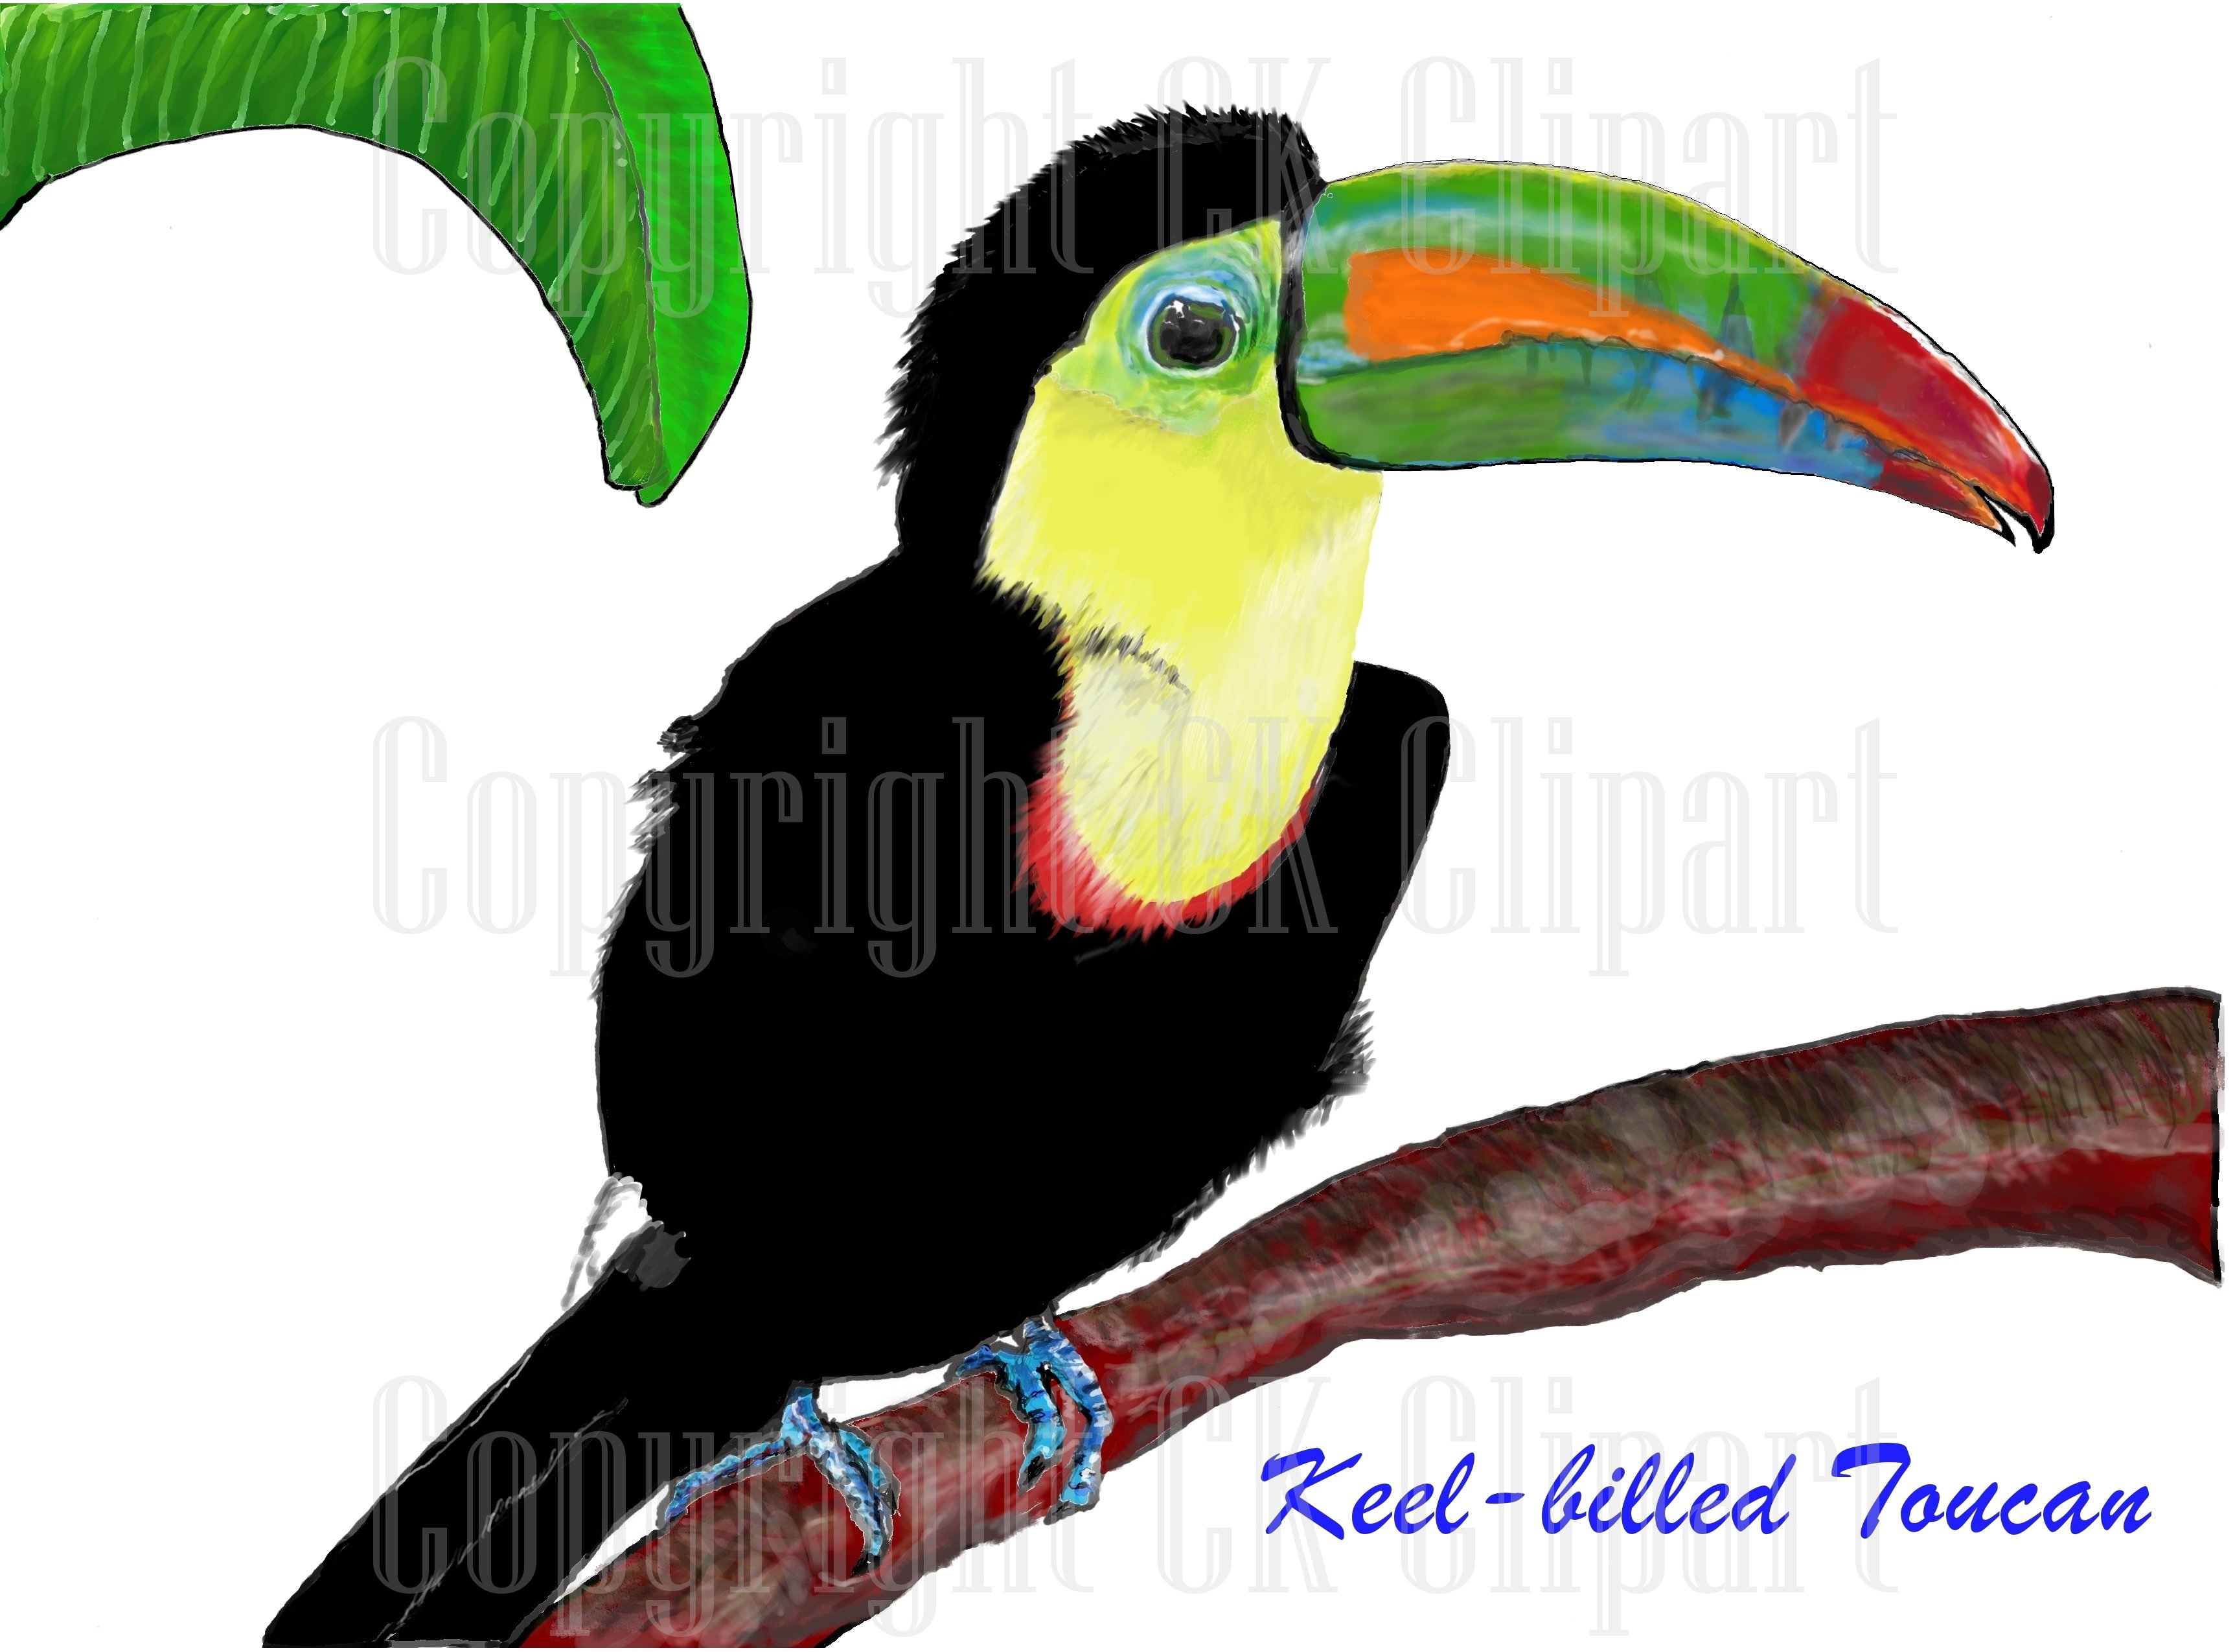 Keel-billed Toucan clipart #11, Download drawings